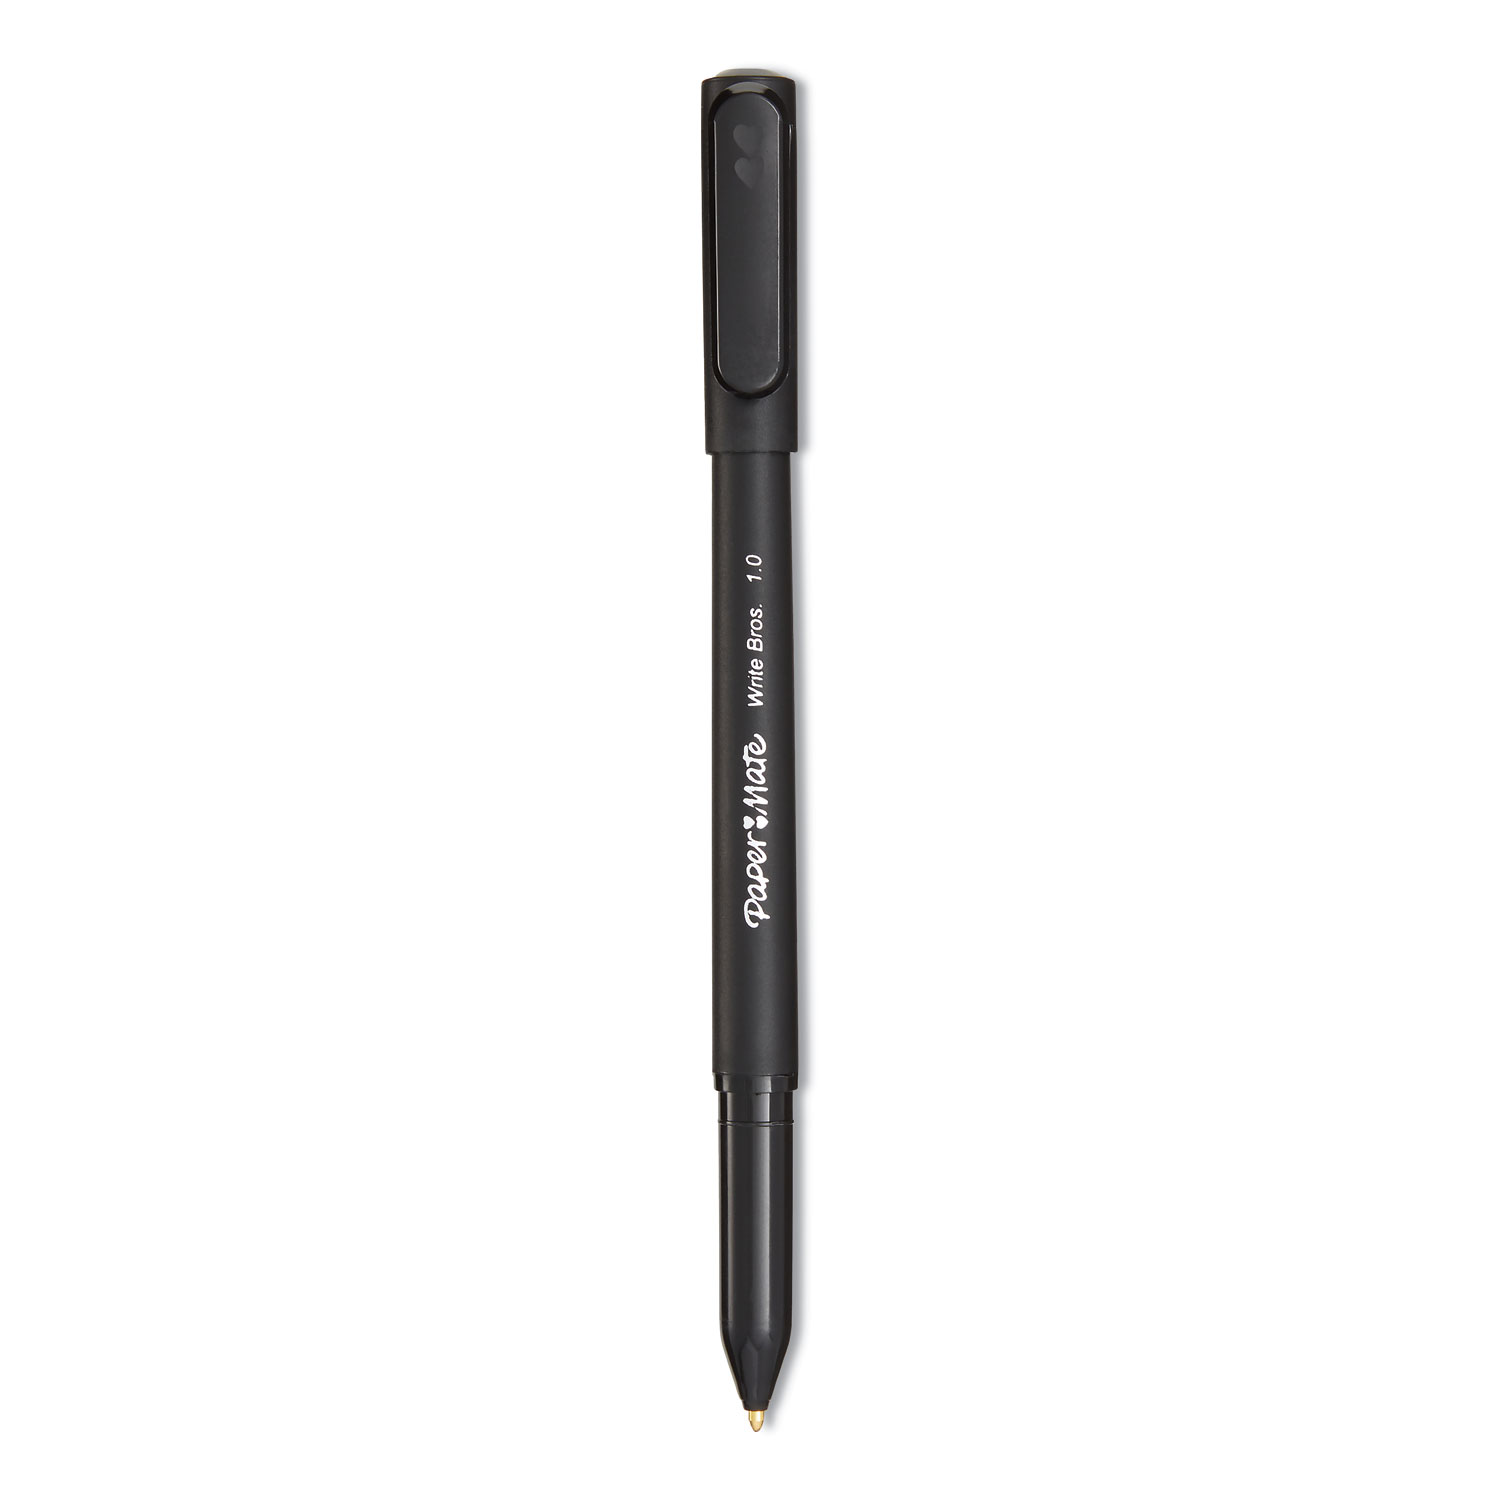 Write Bros. Stick Ballpoint Pen Value Pack, 1mm, Black Ink/Barrel, 60/Pack